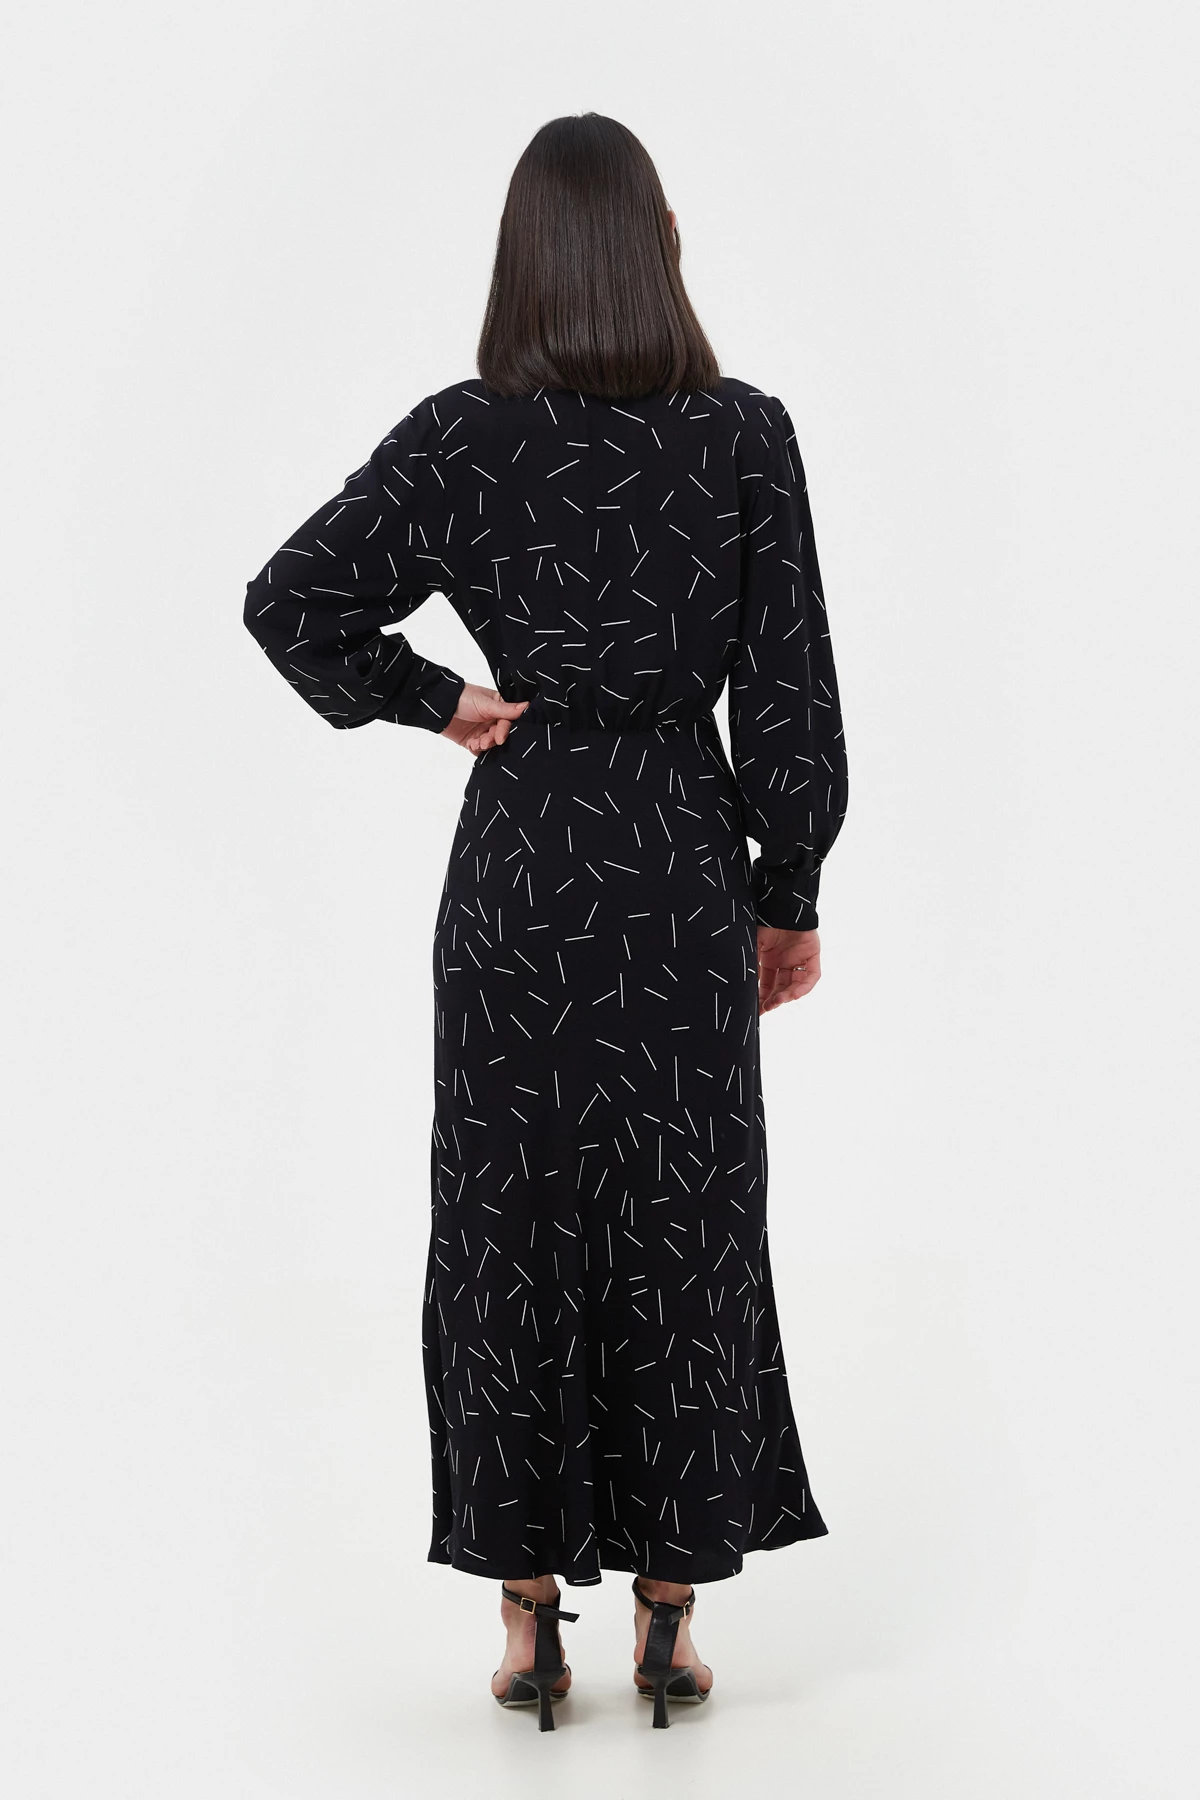 Black viscose elongated midi dress in geometric print, photo 5